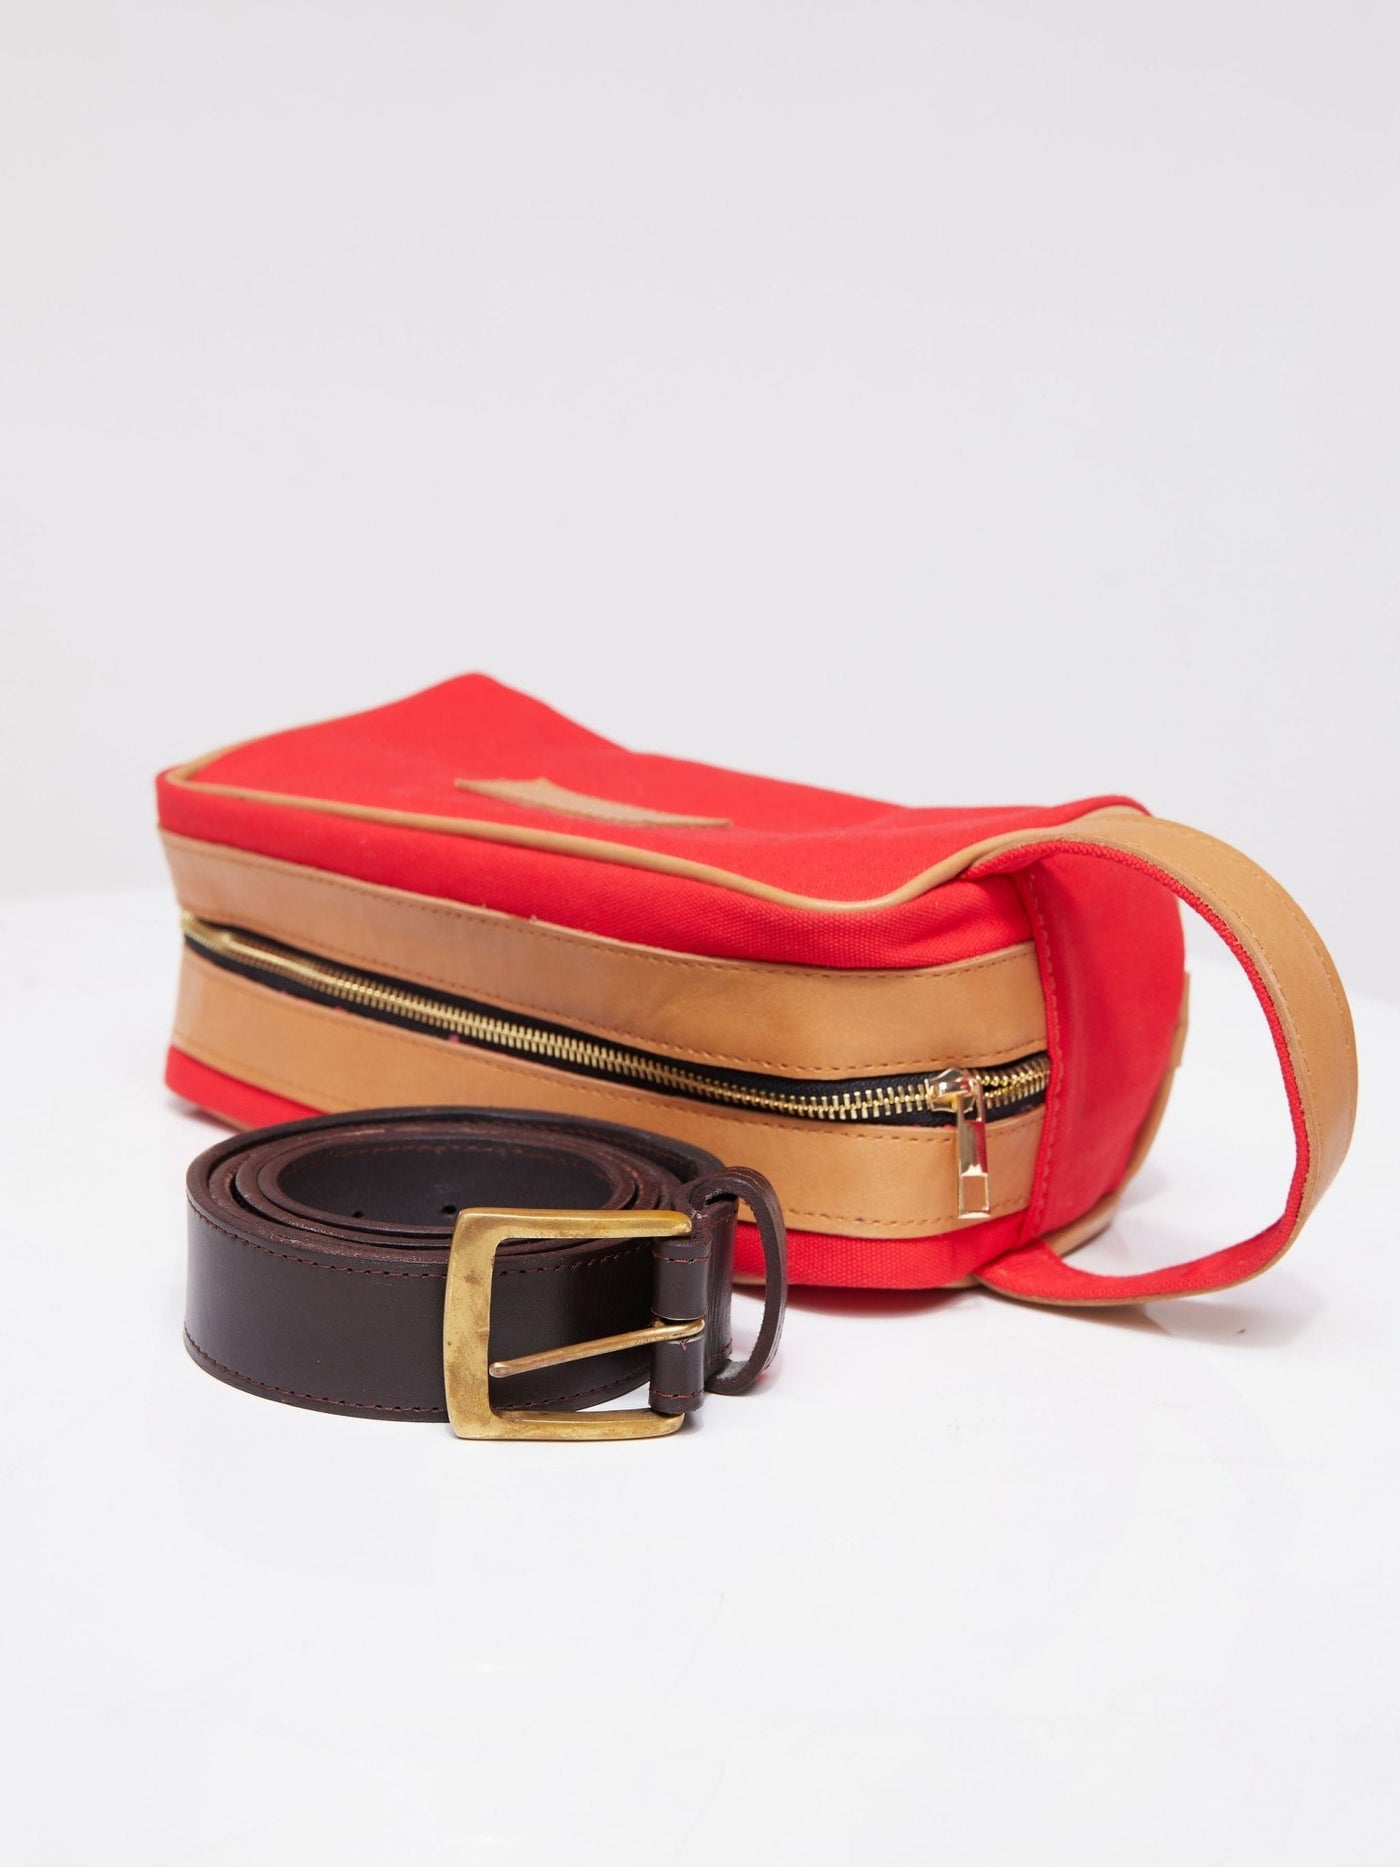 Jeilo Leather Belt + Washbag - Chocolate / Red / Mustard - Shop Zetu Kenya